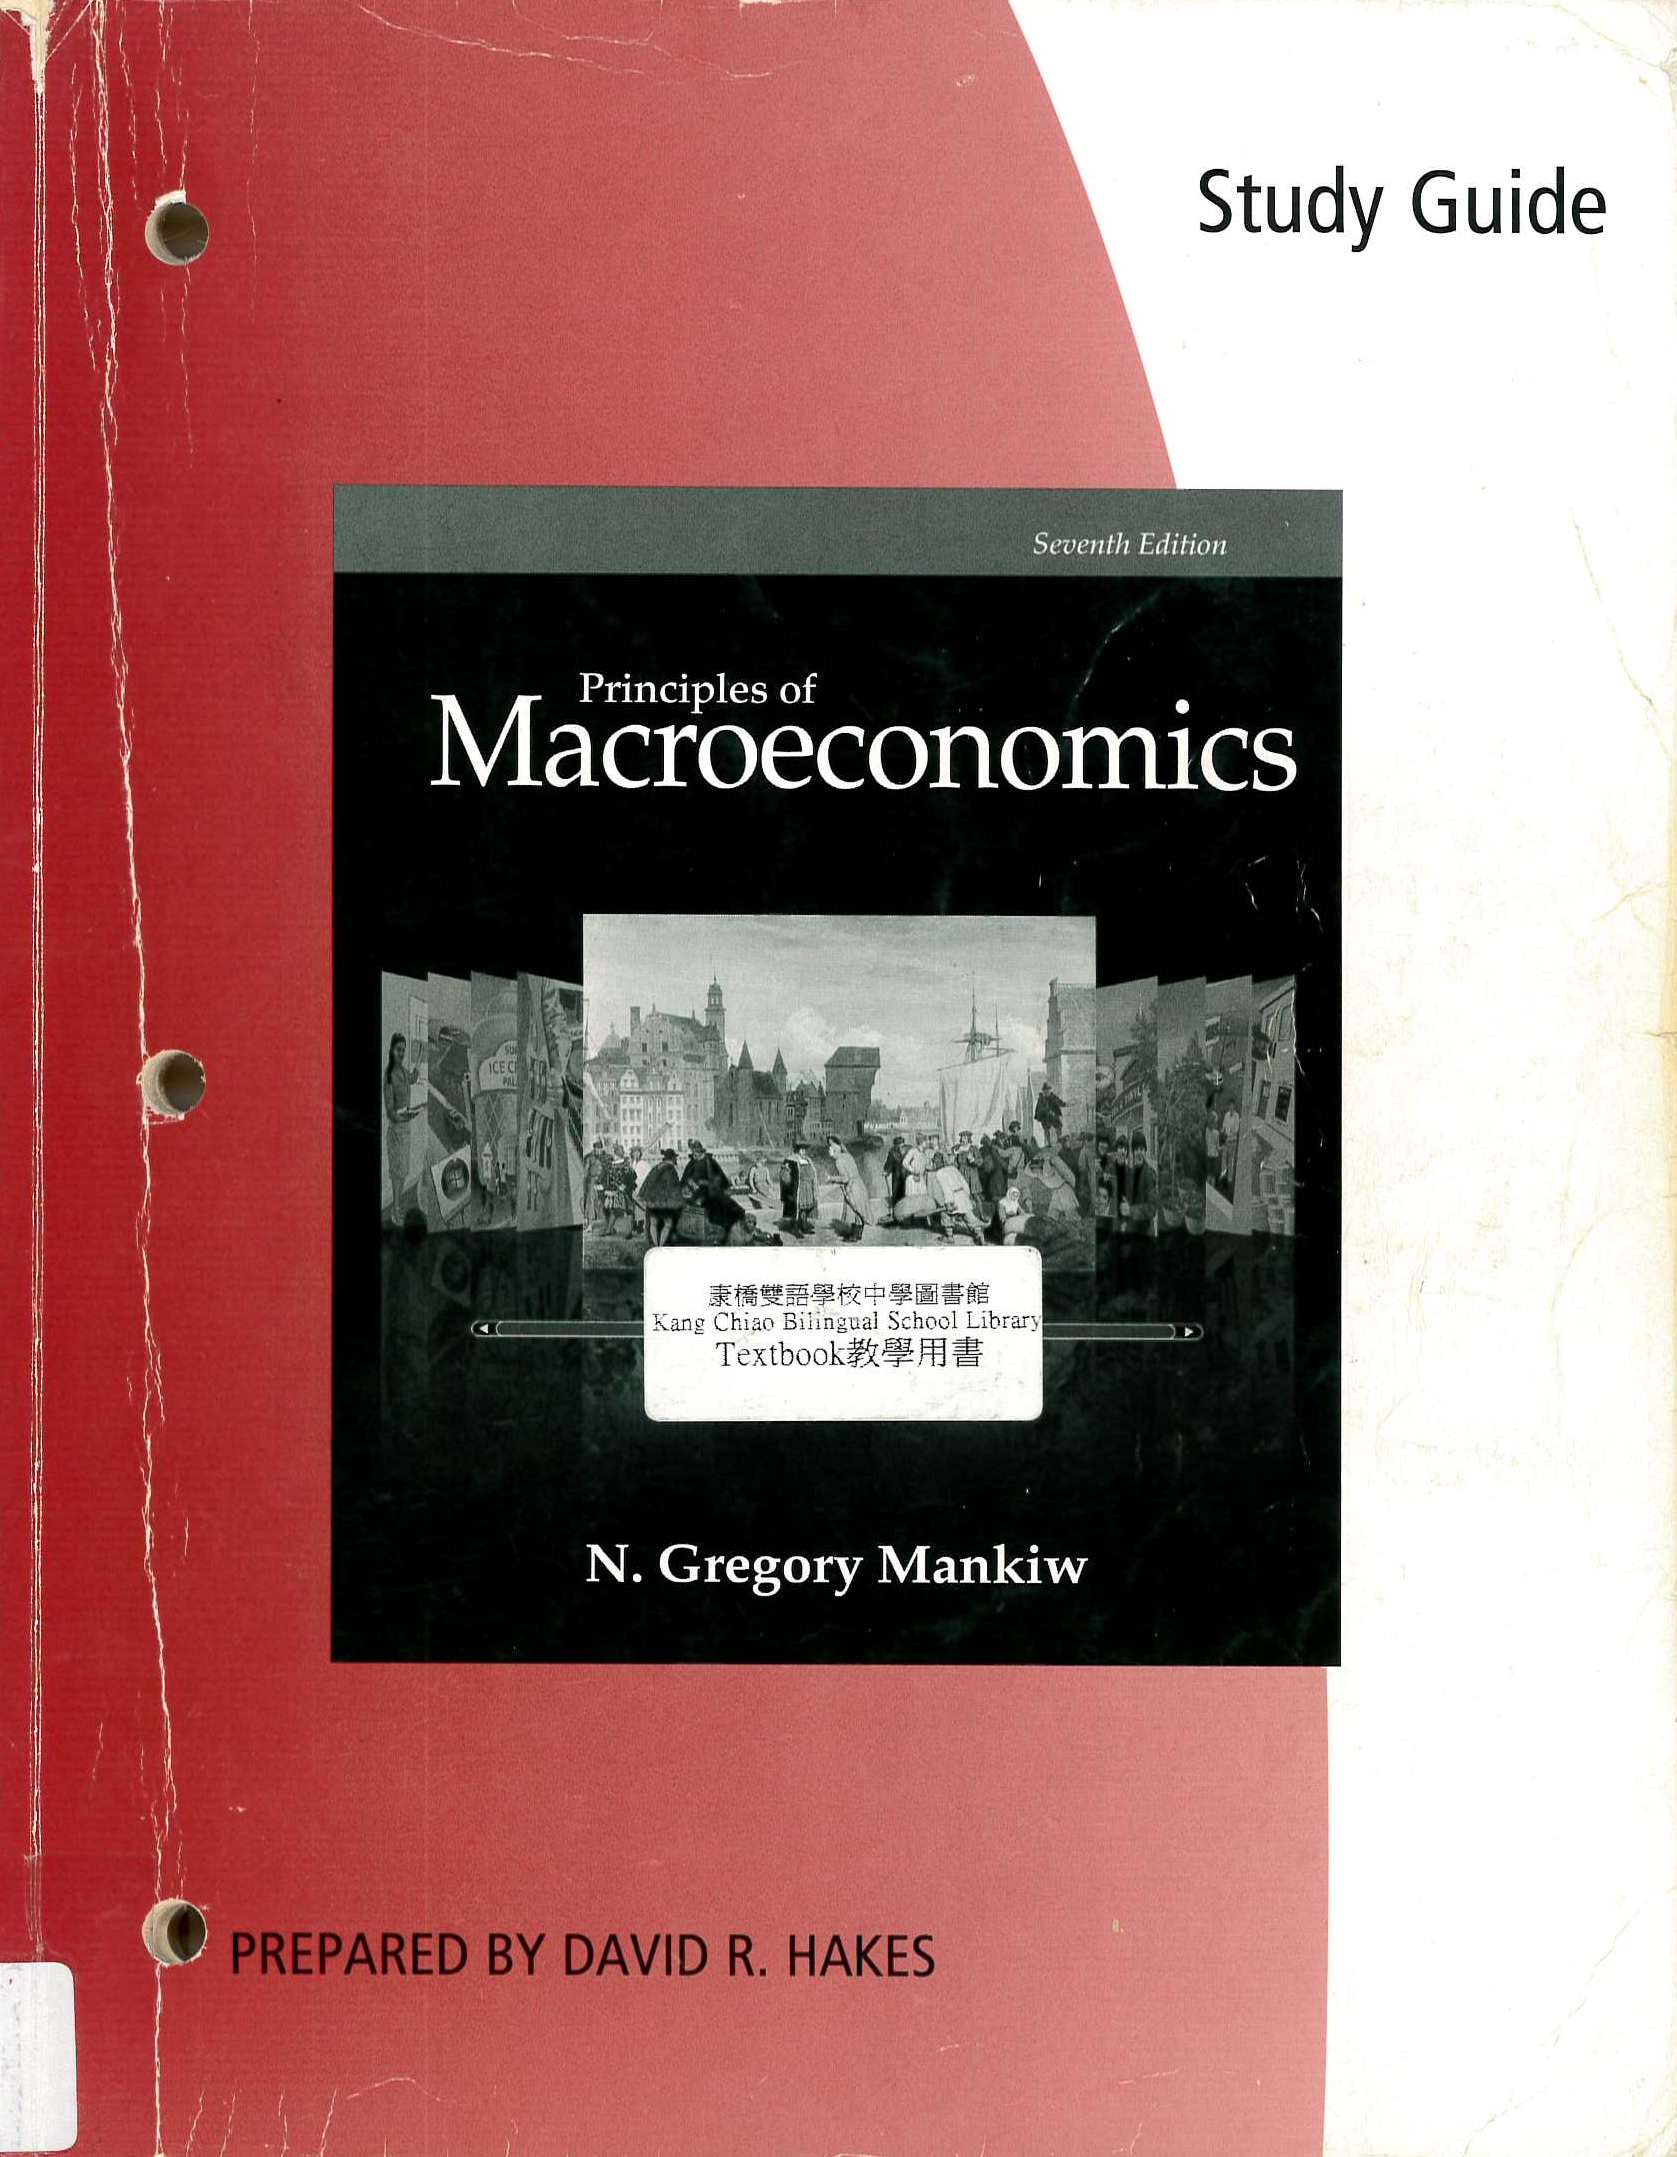 Principles of macroeconomics : study guide